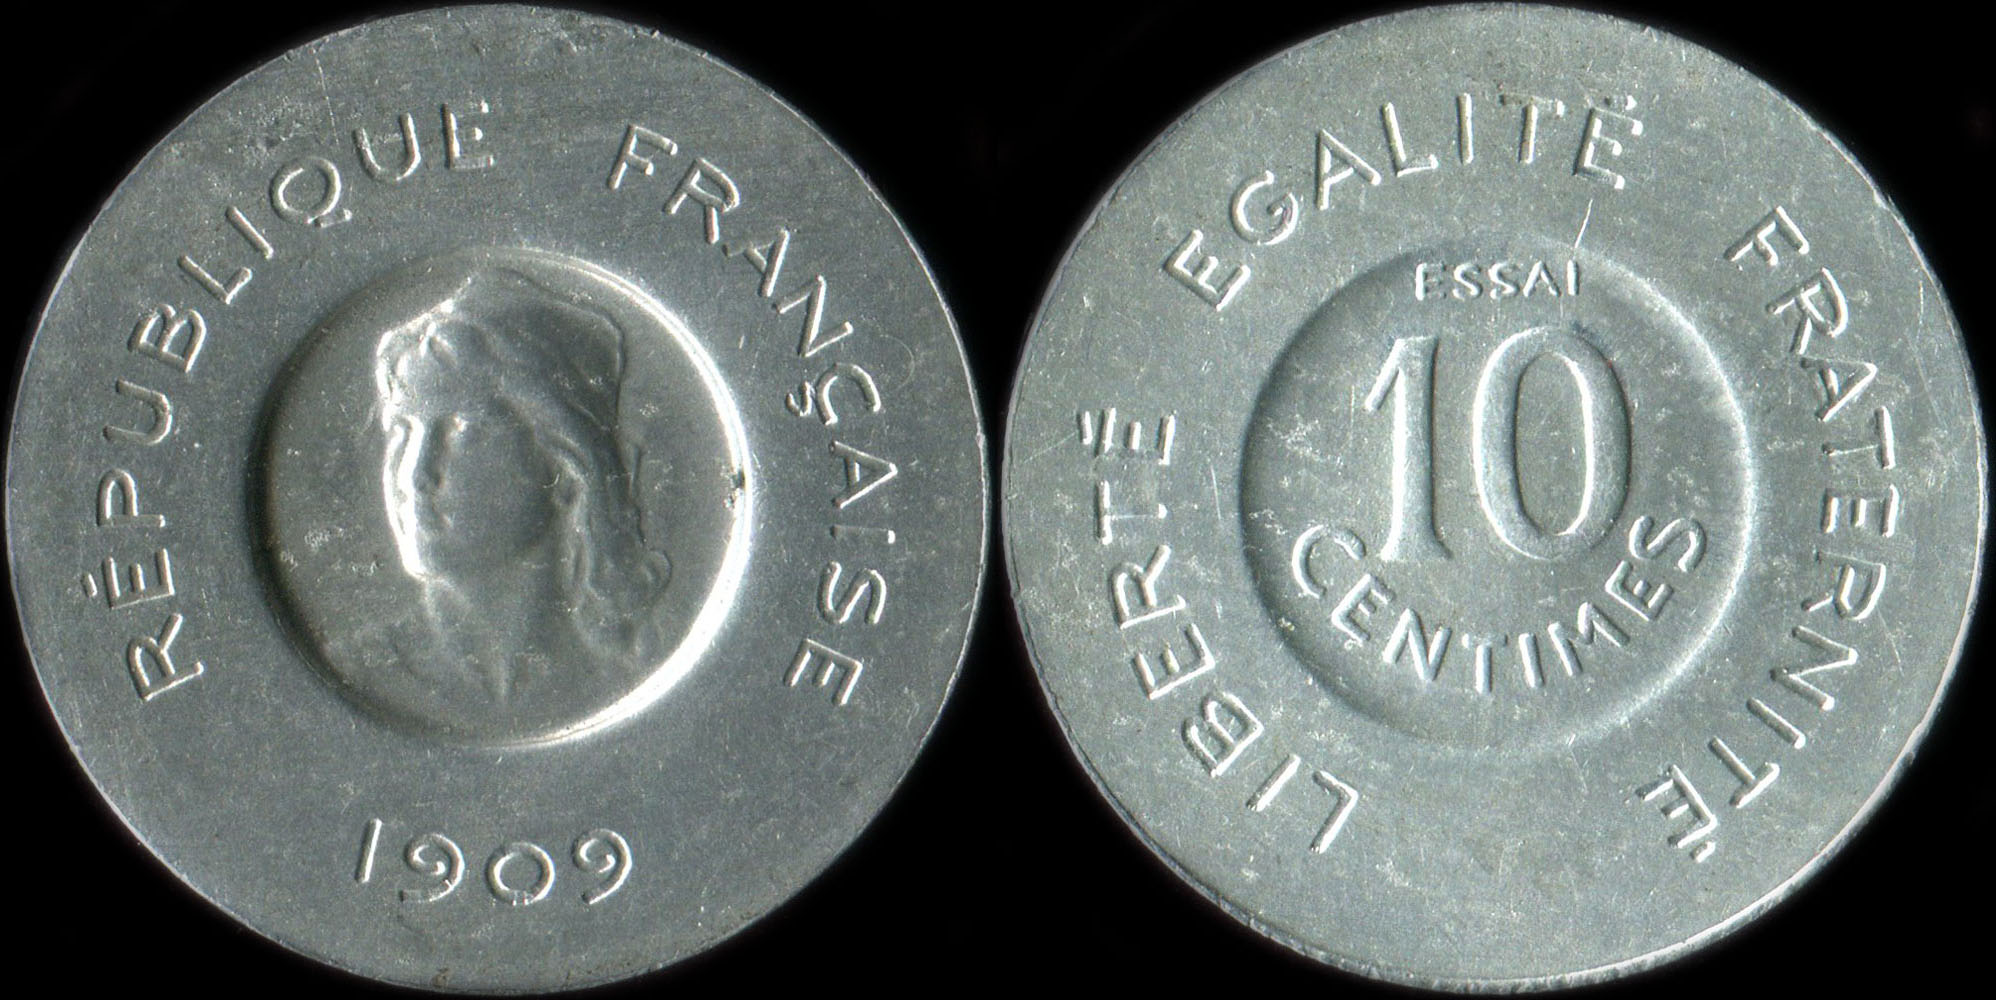 Pice d'essai de Rude 10 centimes 1909 - Aluminium